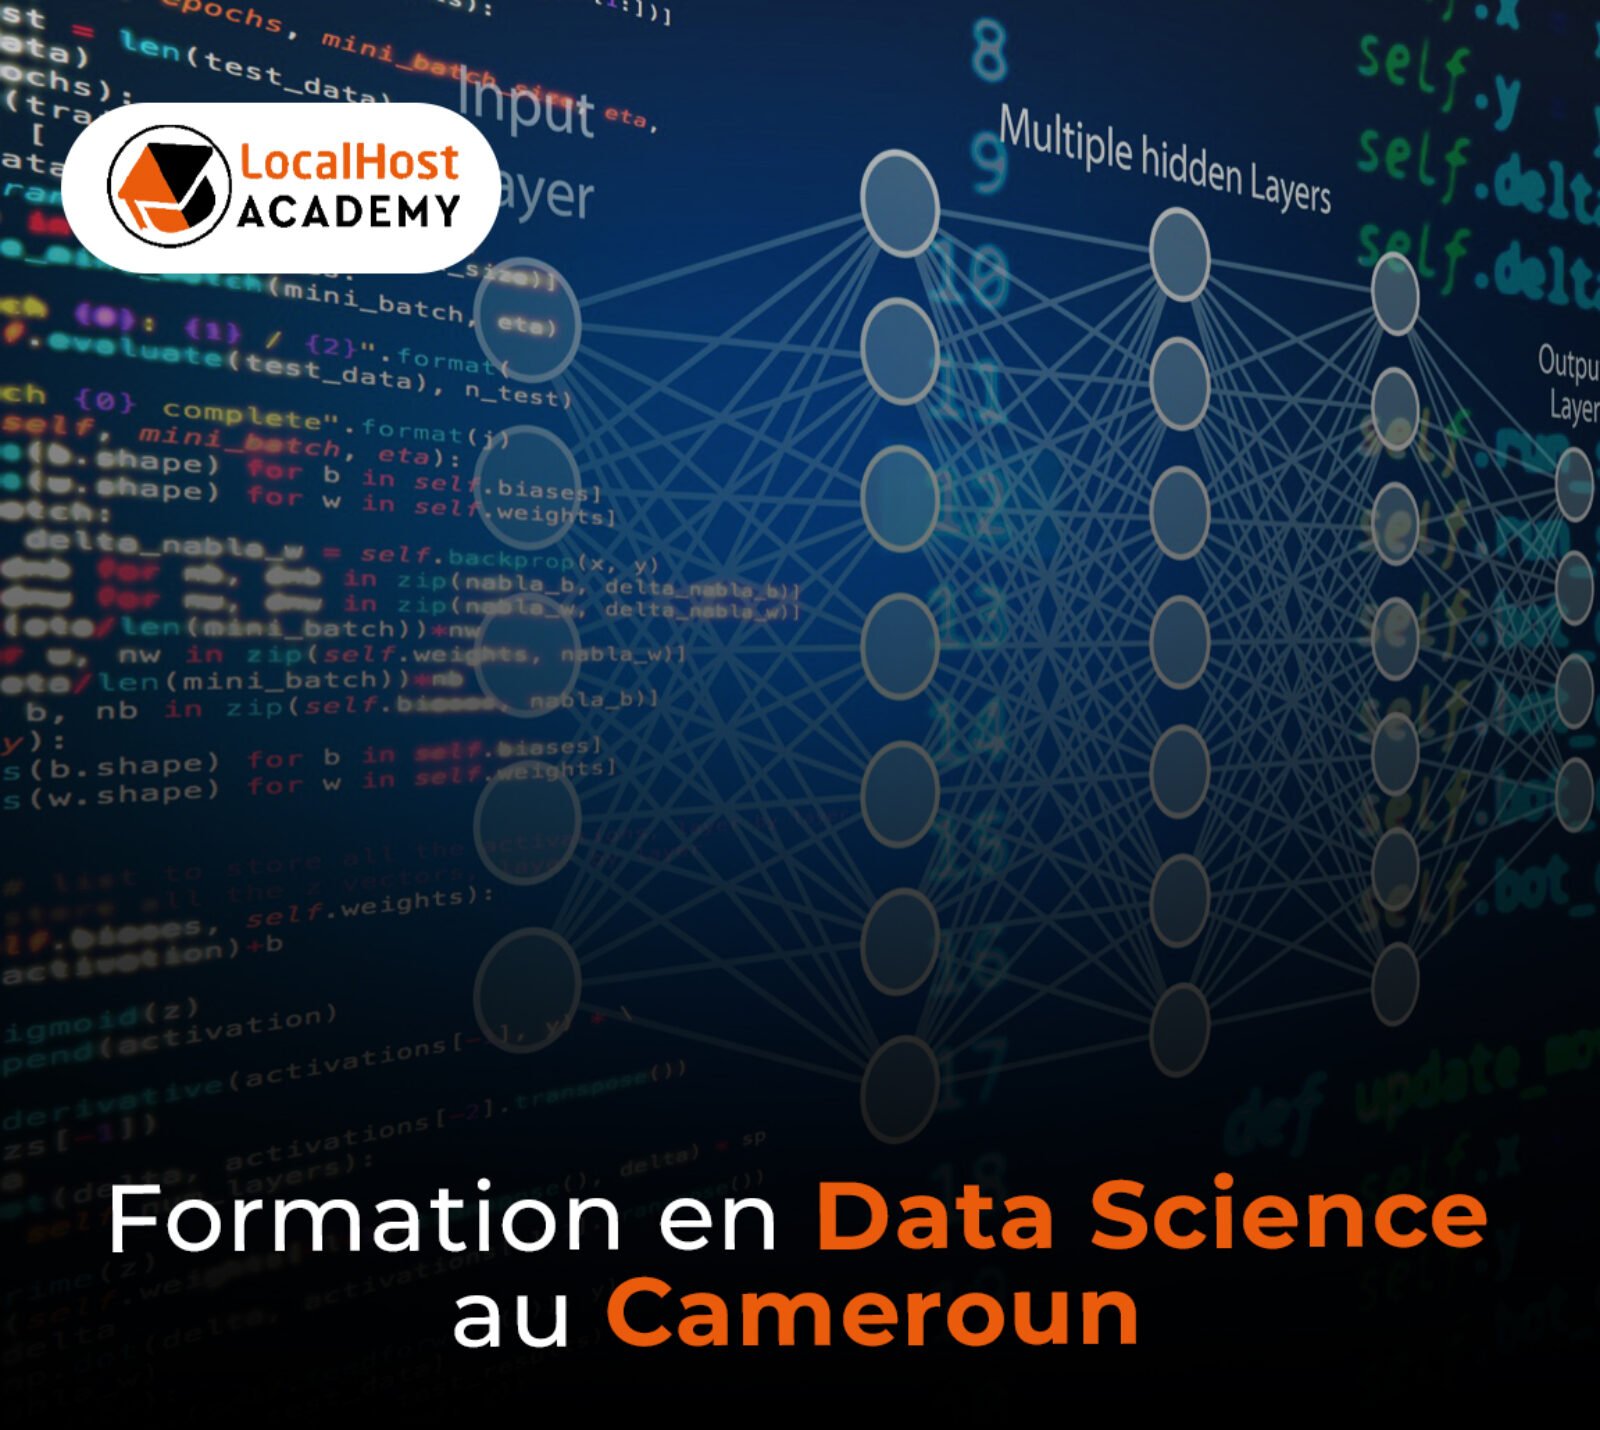 Formation en Data science au Cameroun